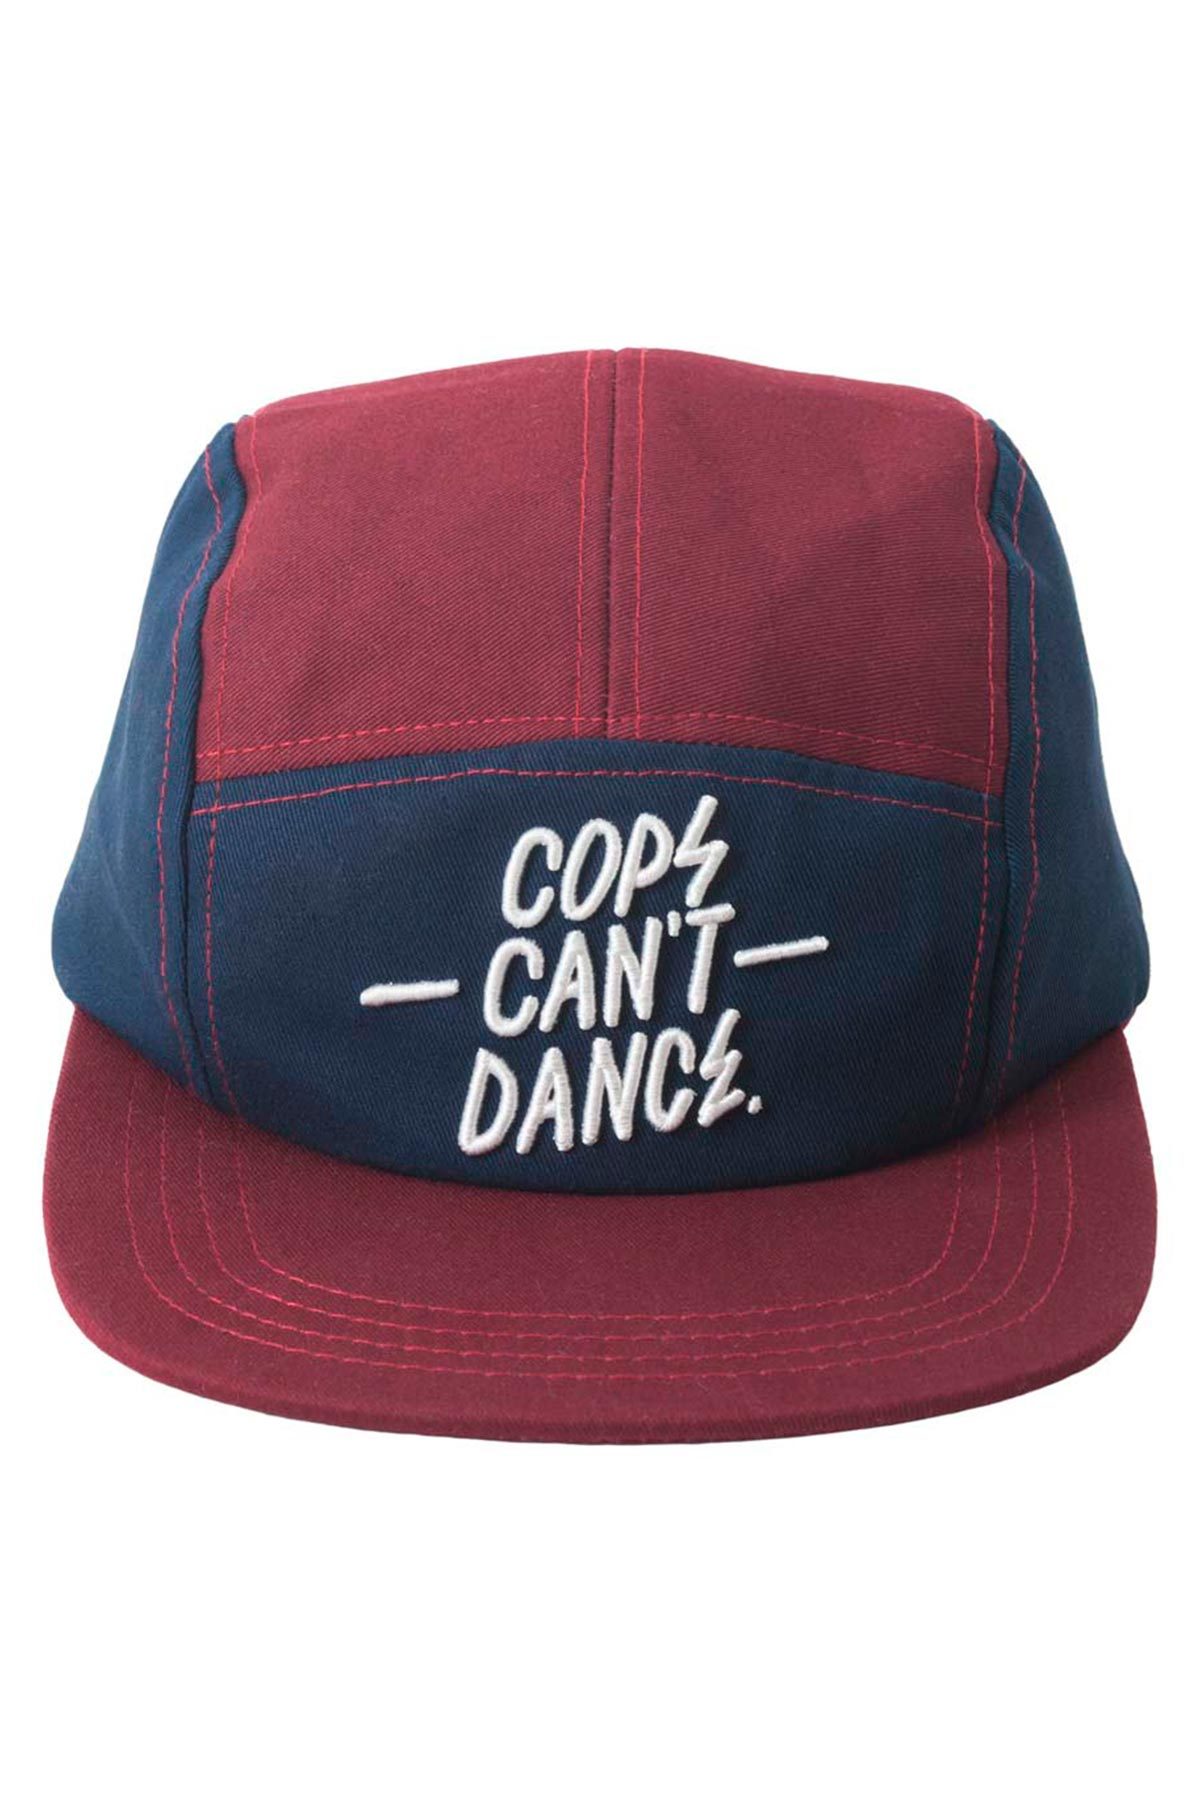 Mr. Serious COPS CAN'T DANCE cap